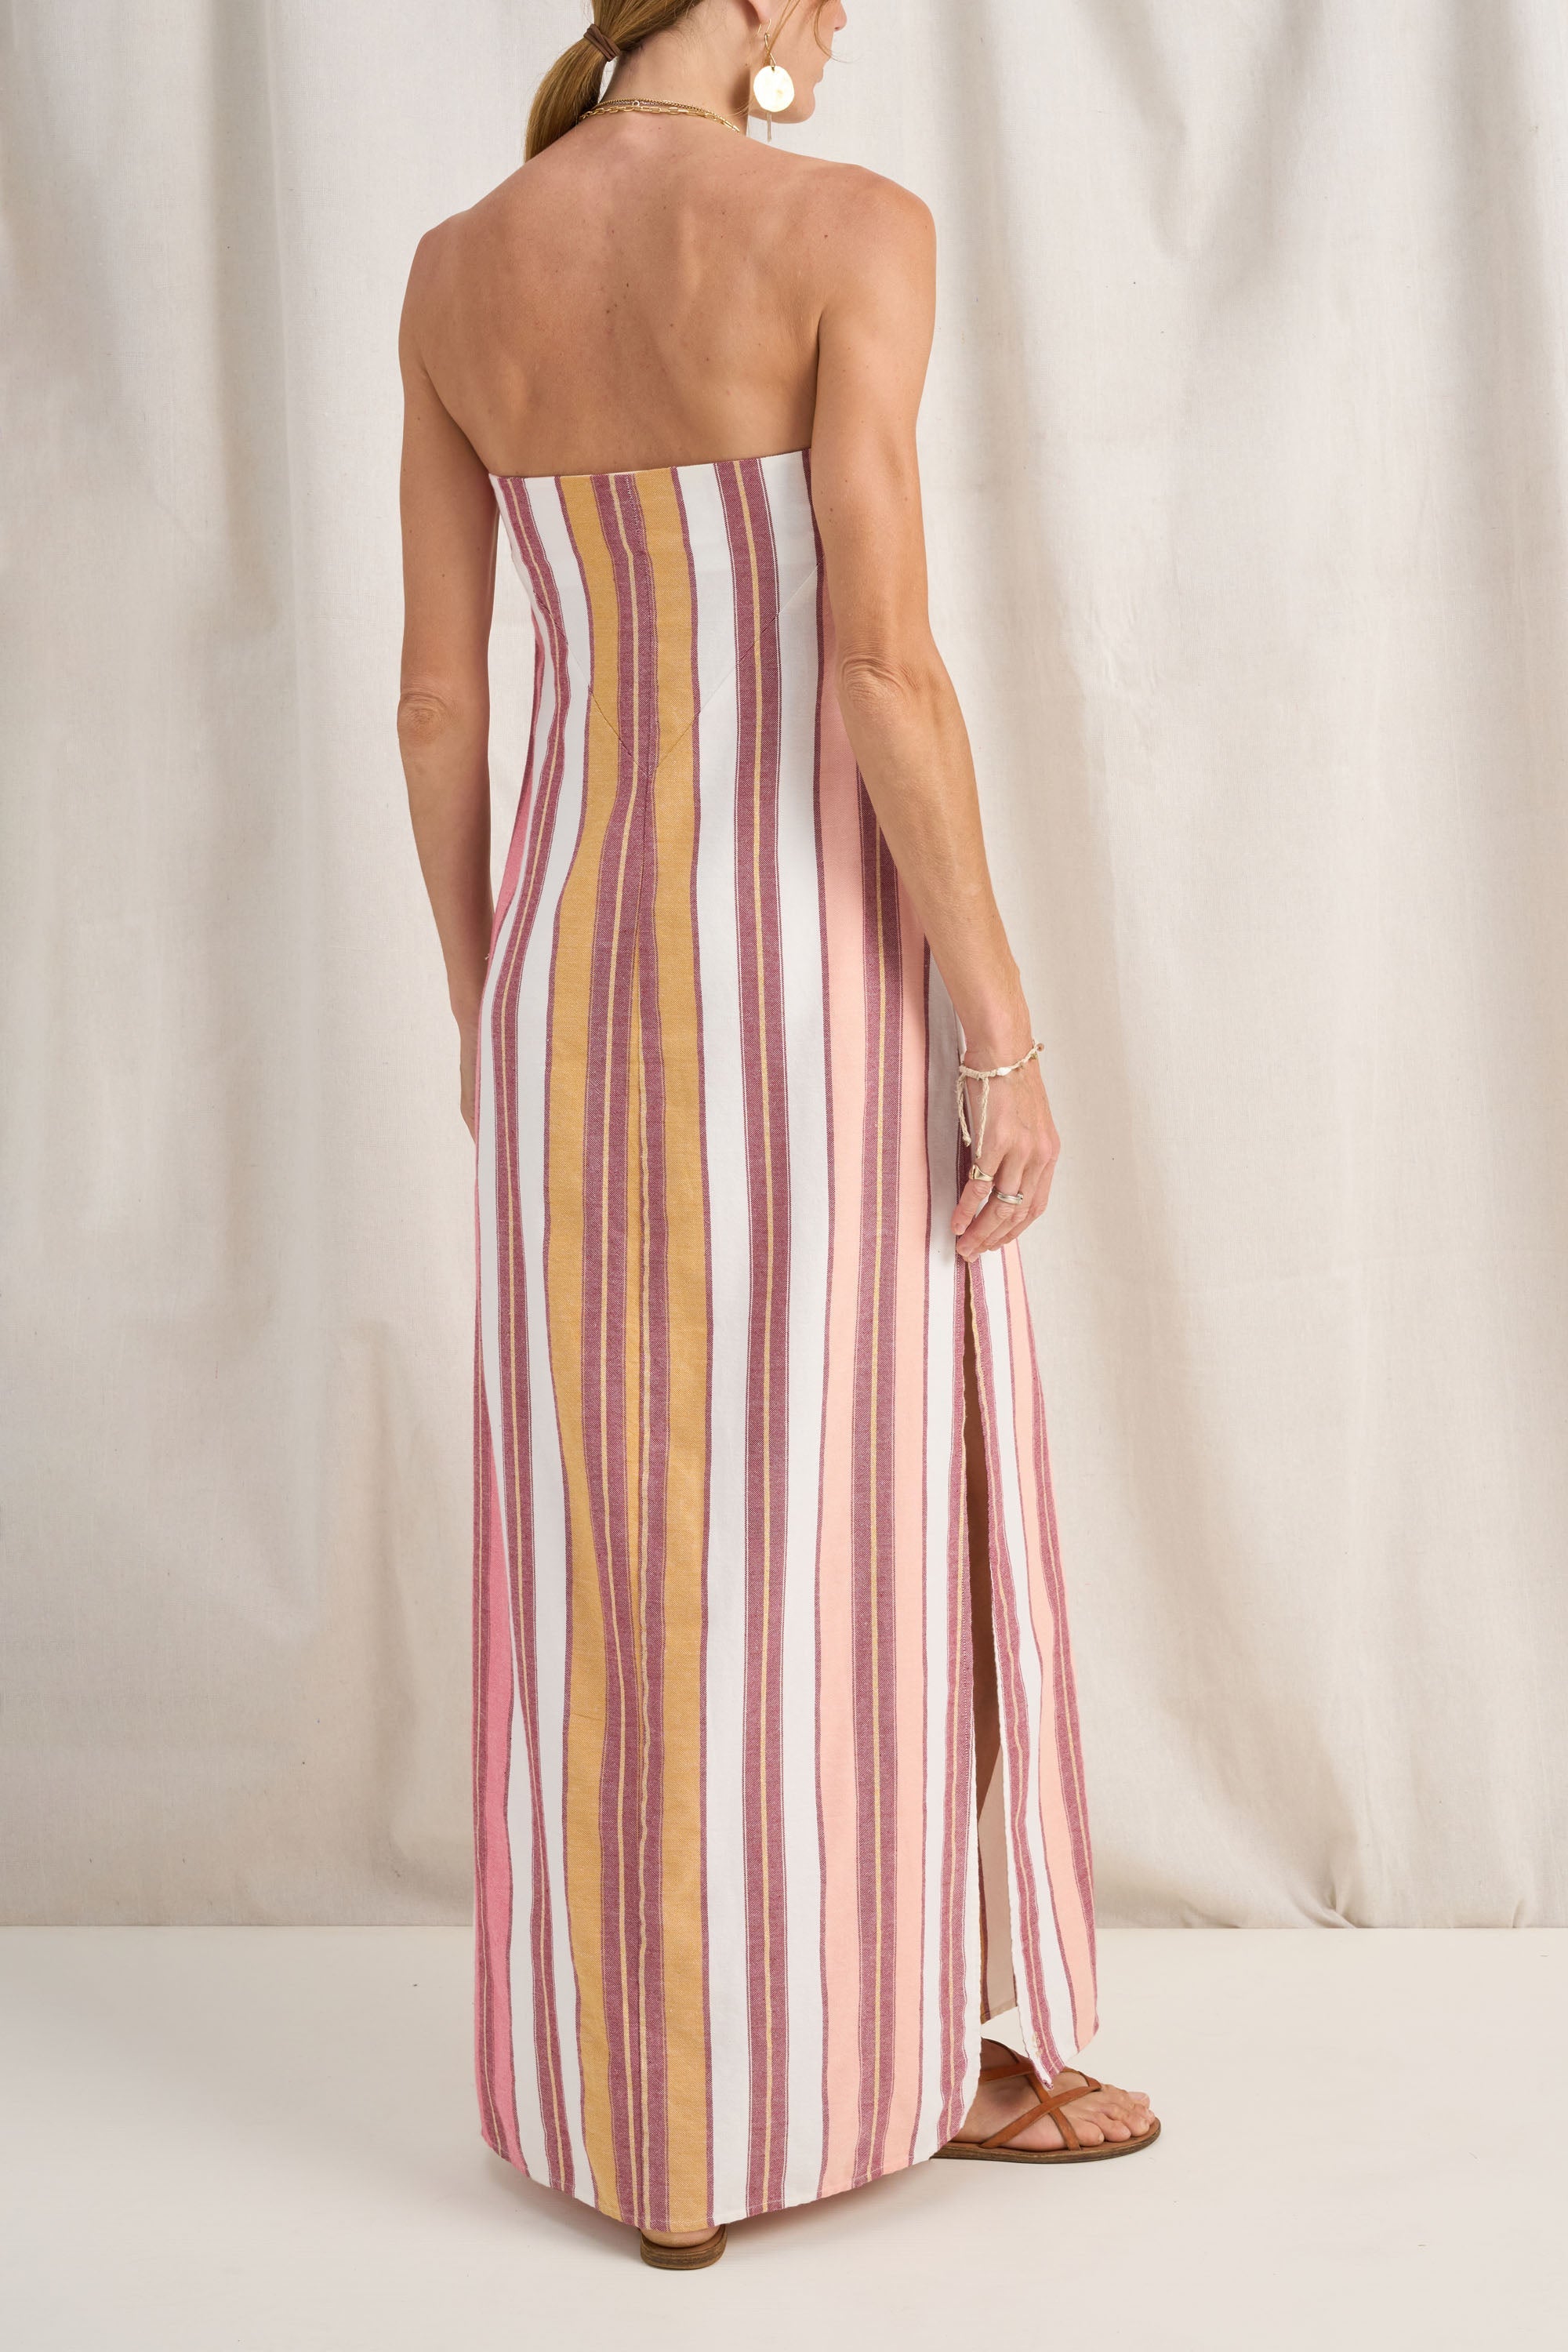 Ilio Nema | Dione Strapless Dress - Coral Fez Stripe